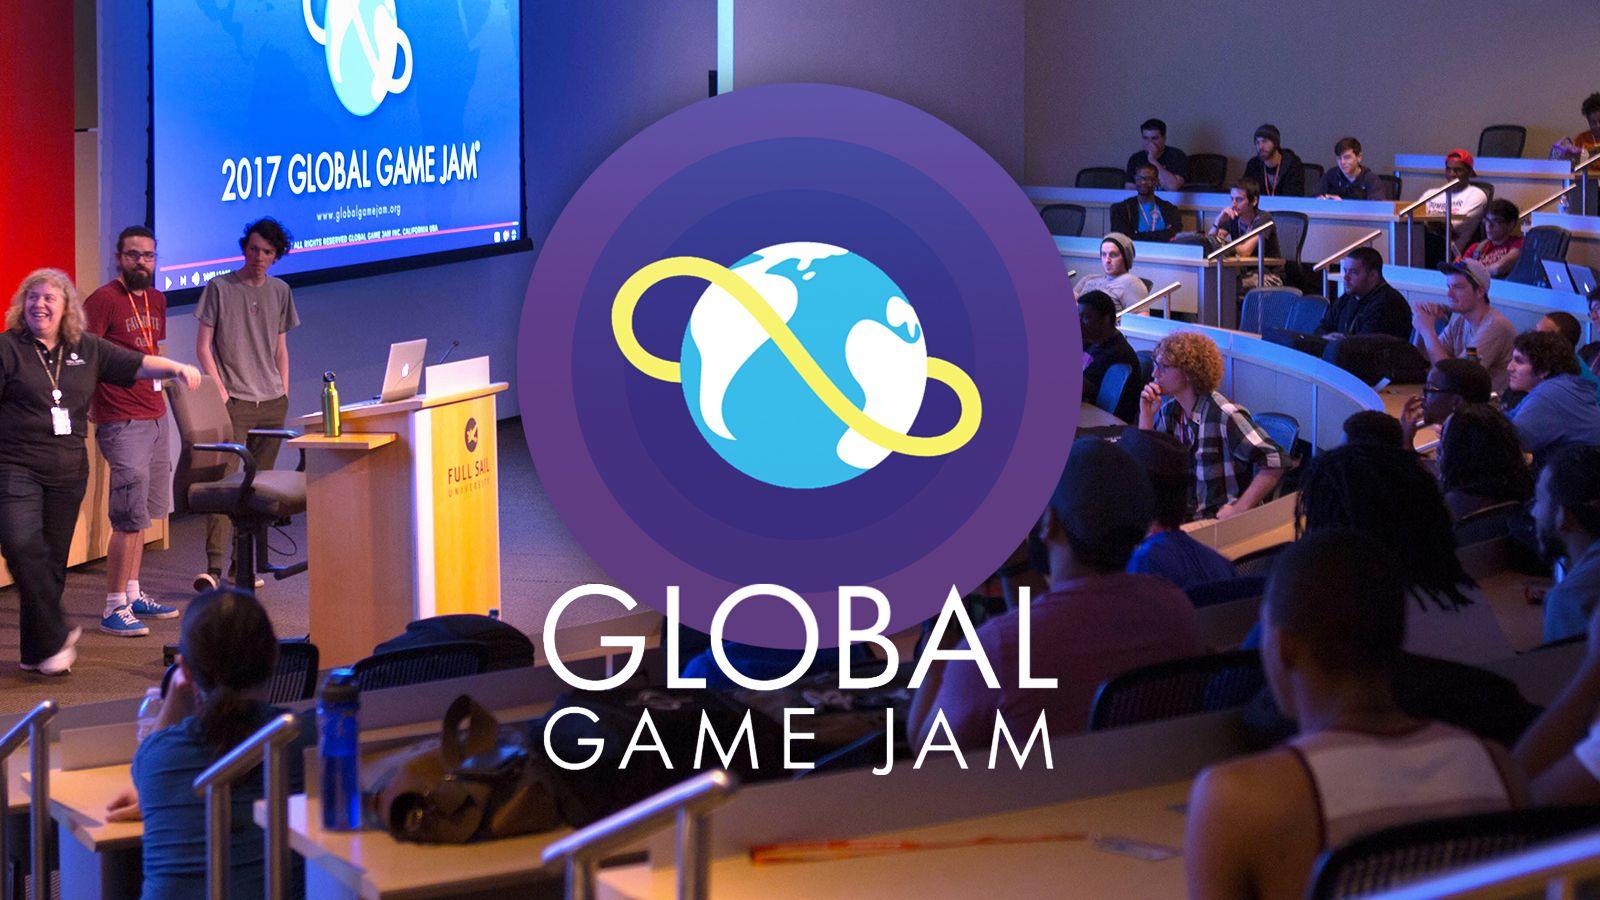 Global Game Jam 2017 Makes ‘Waves’ - Hero image 